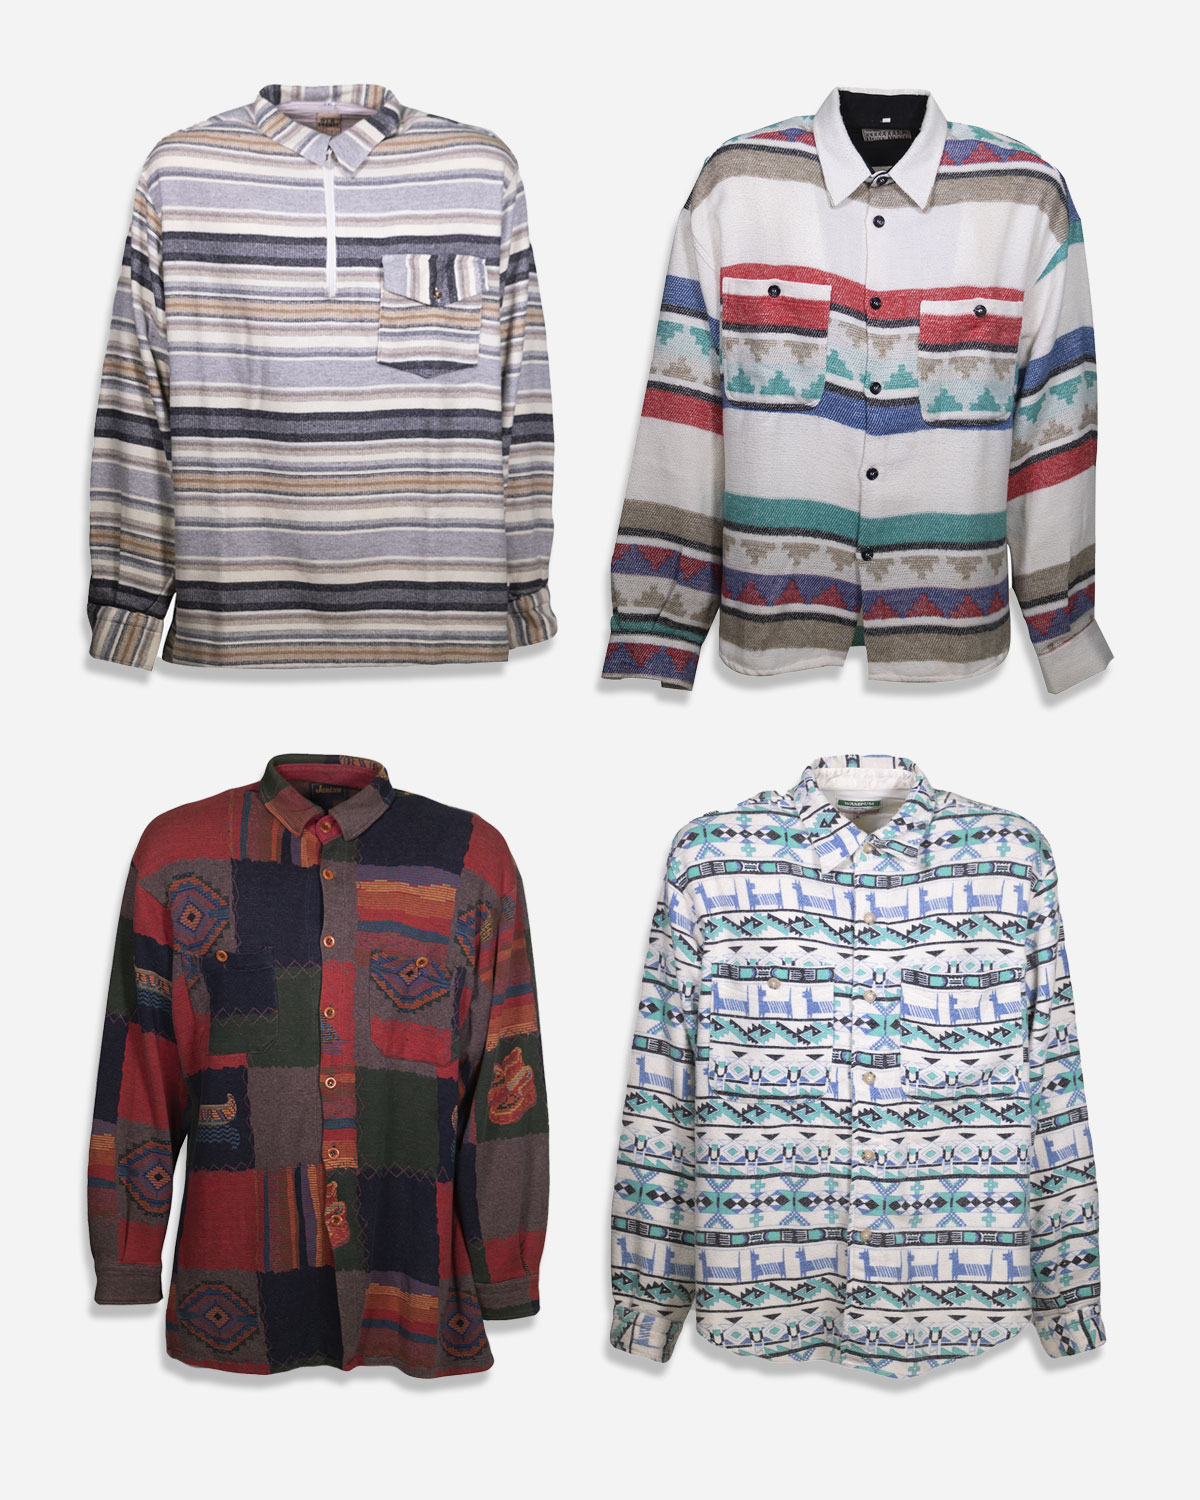 Men's flannel shirts with Aztec print: 4 pieces